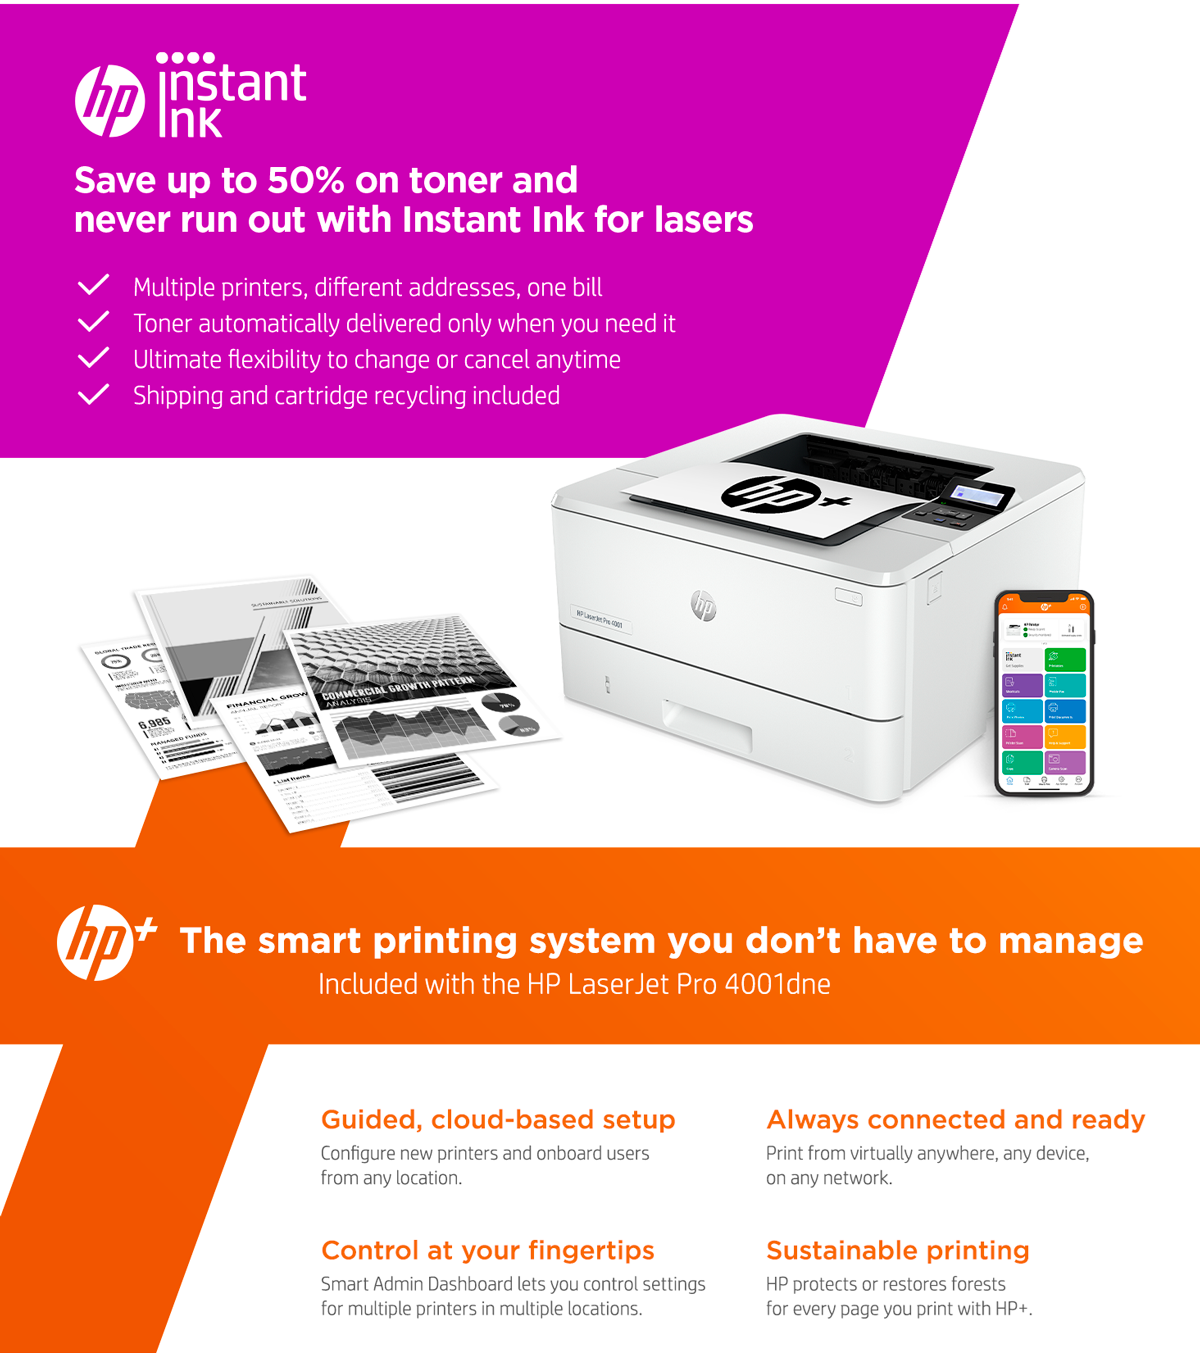 HP LaserJet Pro 3000 3001dw Desktop Wireless Laser Printer - Monochrome -  3G650F#BGJ - Laser Printers 